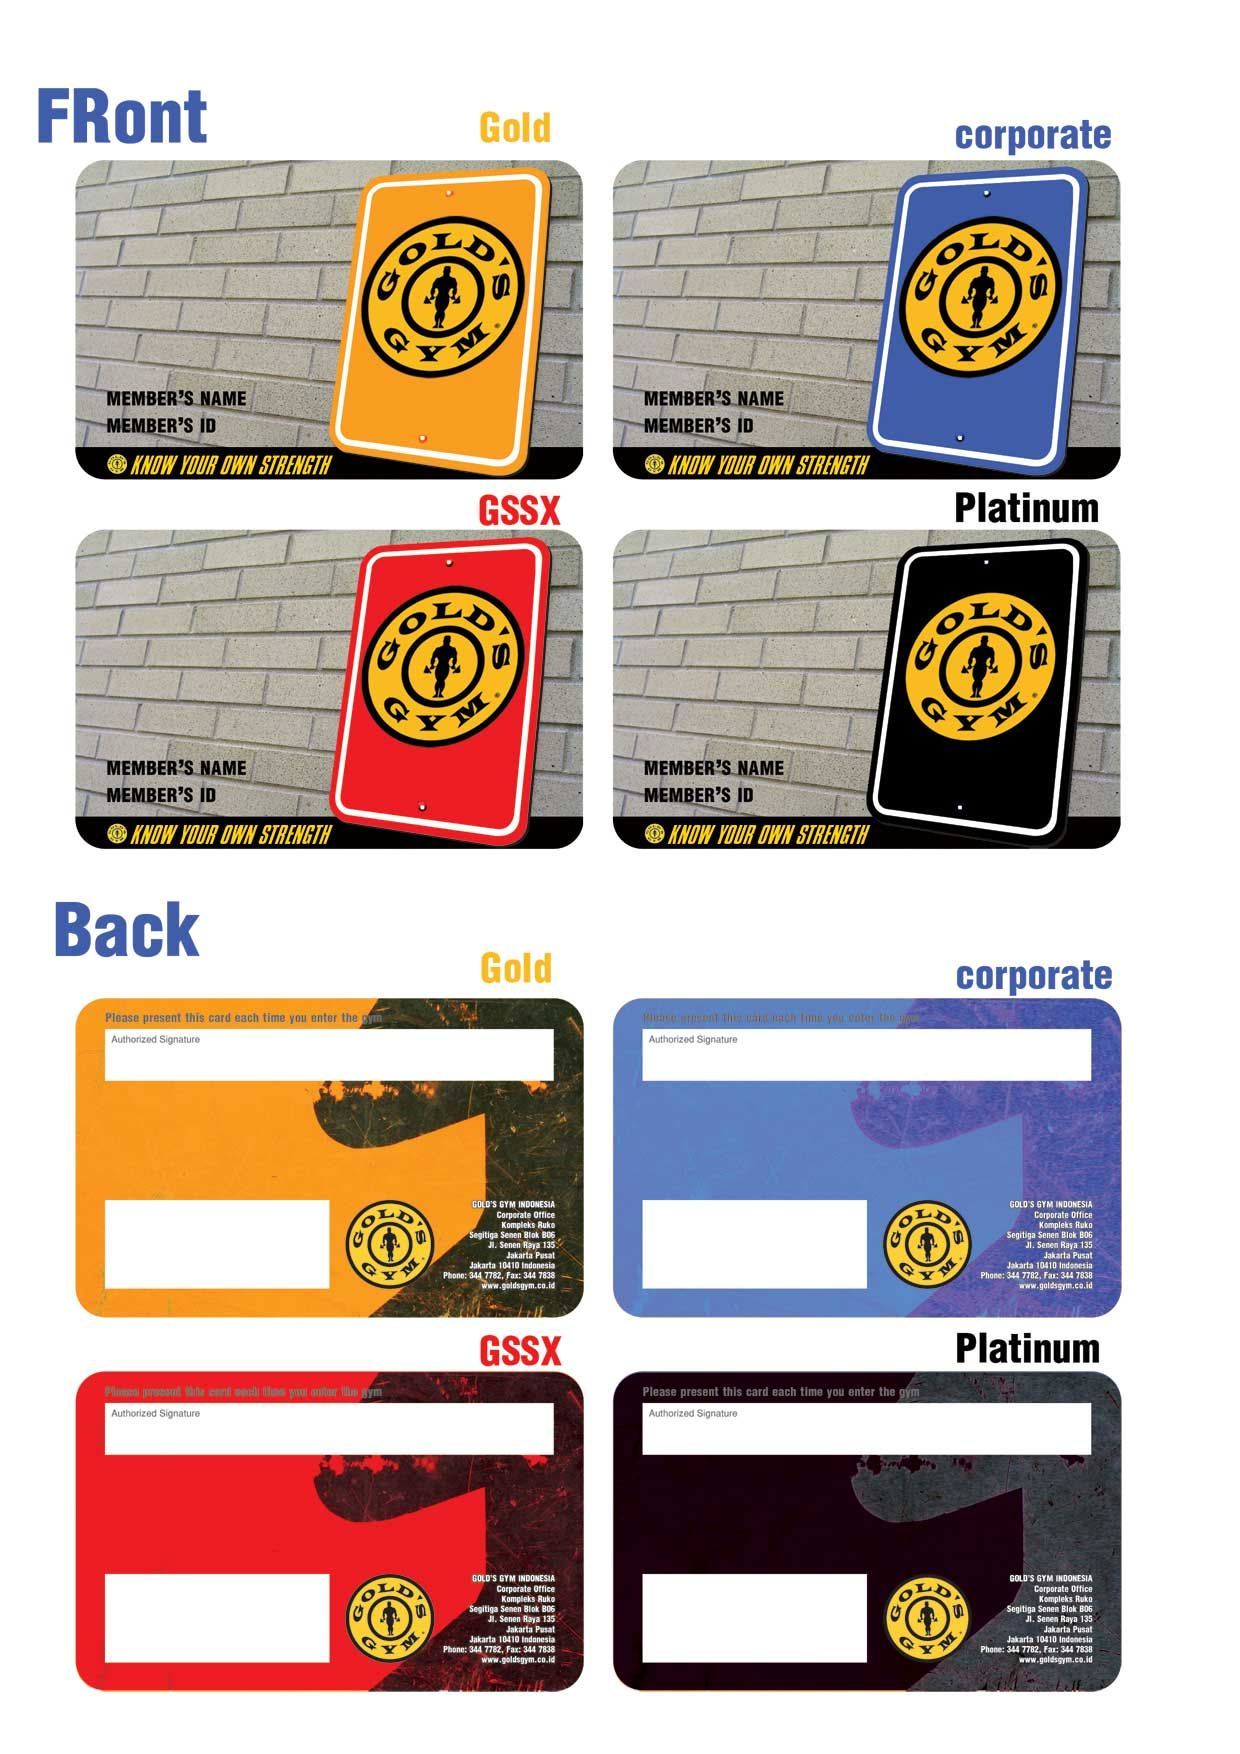 Gold Gym Membership Card With Regard To Gym Membership Card Template